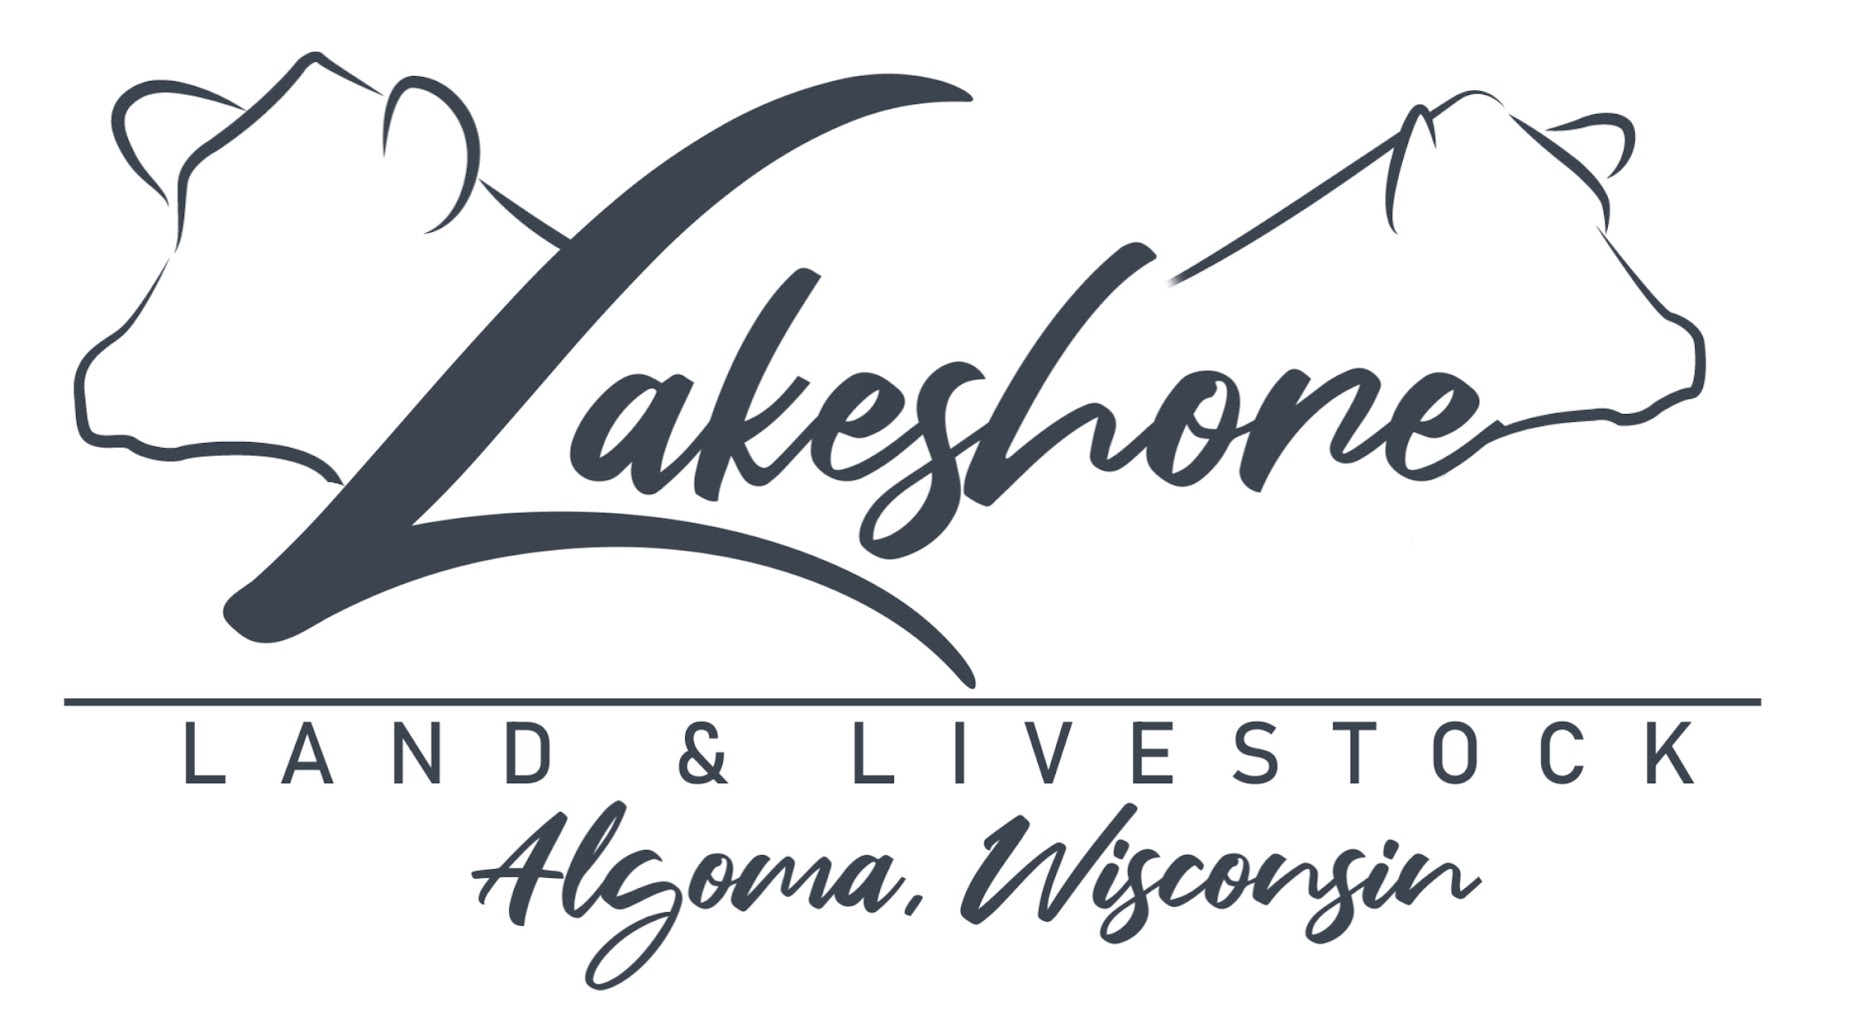 Lakeshore Land & Livestock